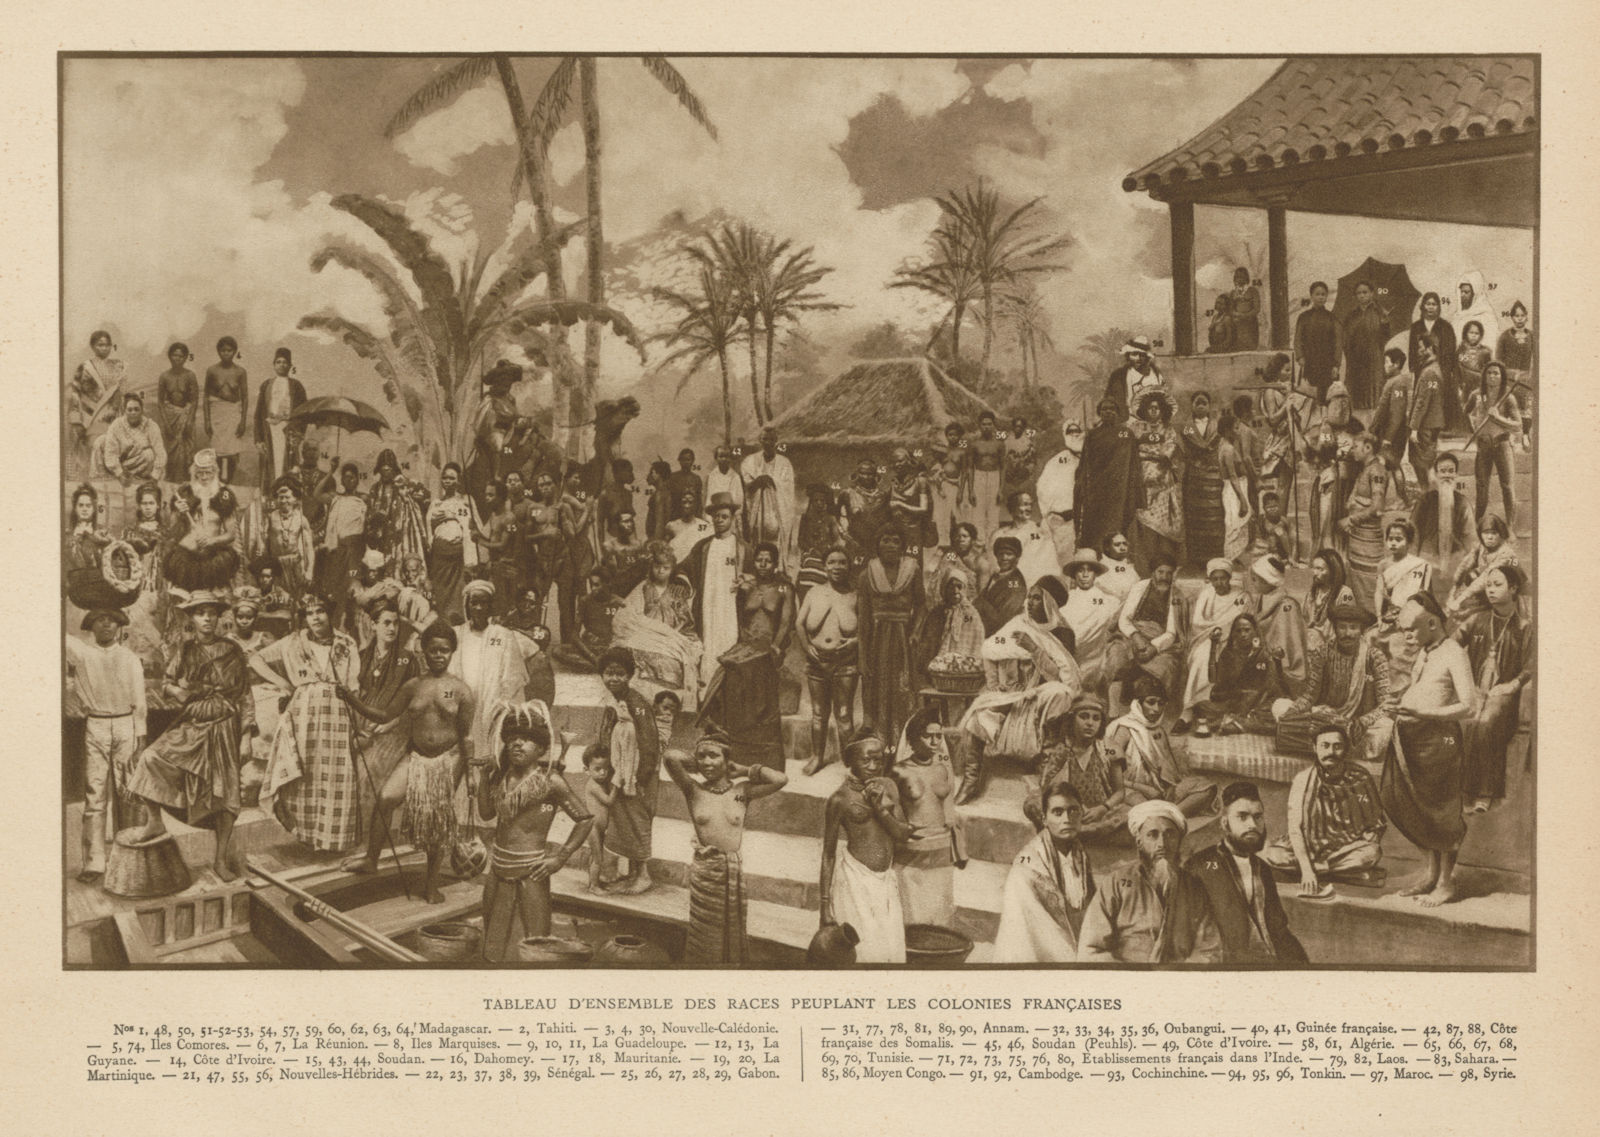 Associate Product Tableau des races des colonies Francaises. People of the French colonies 1931